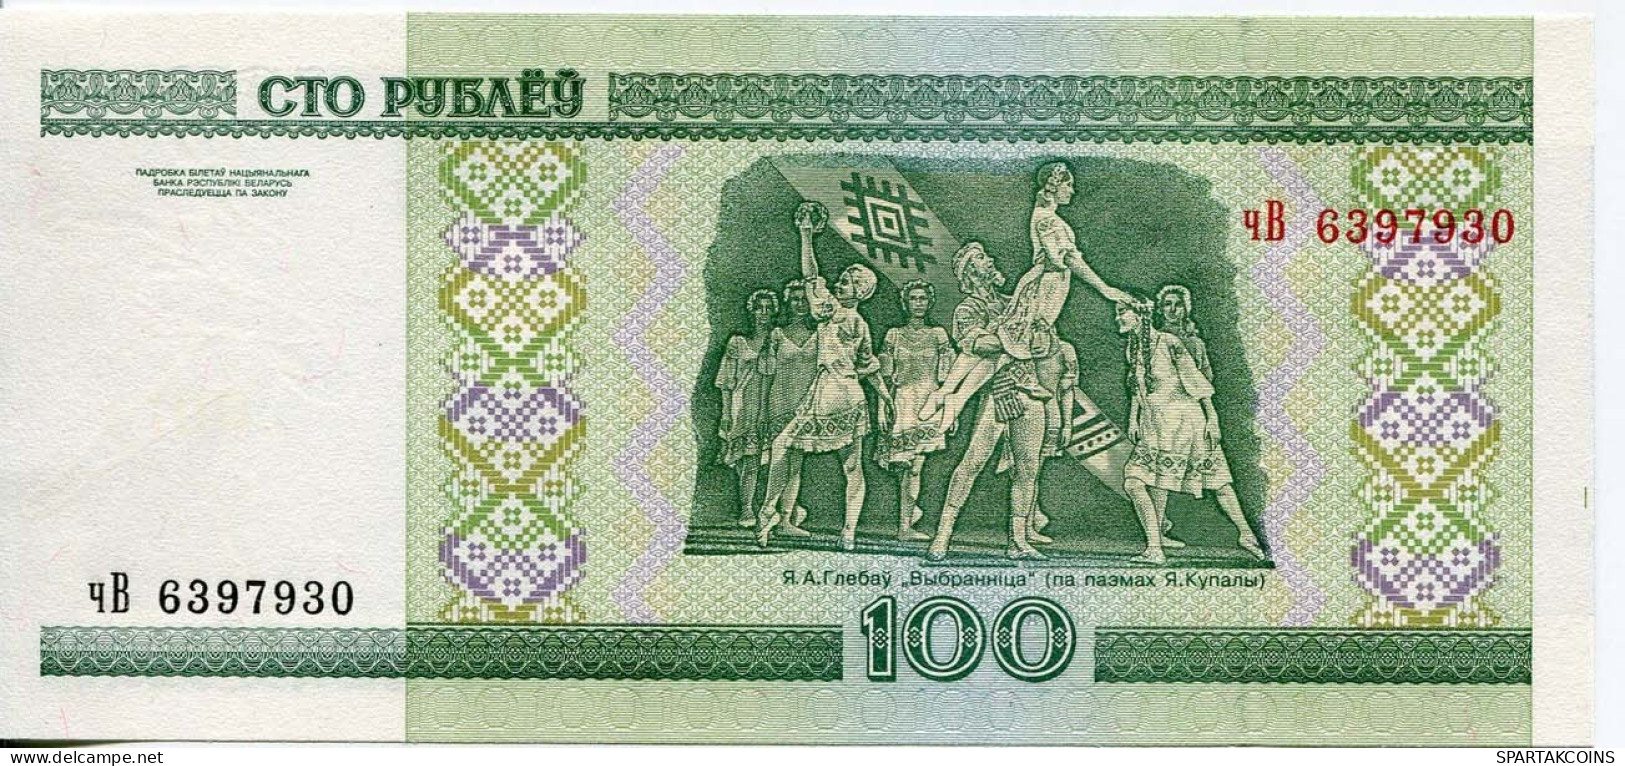 BELARUS 100 RUBLES 2000 Opera And Ballet Theatre Paper Money Banknote #P10203.V - [11] Emissioni Locali